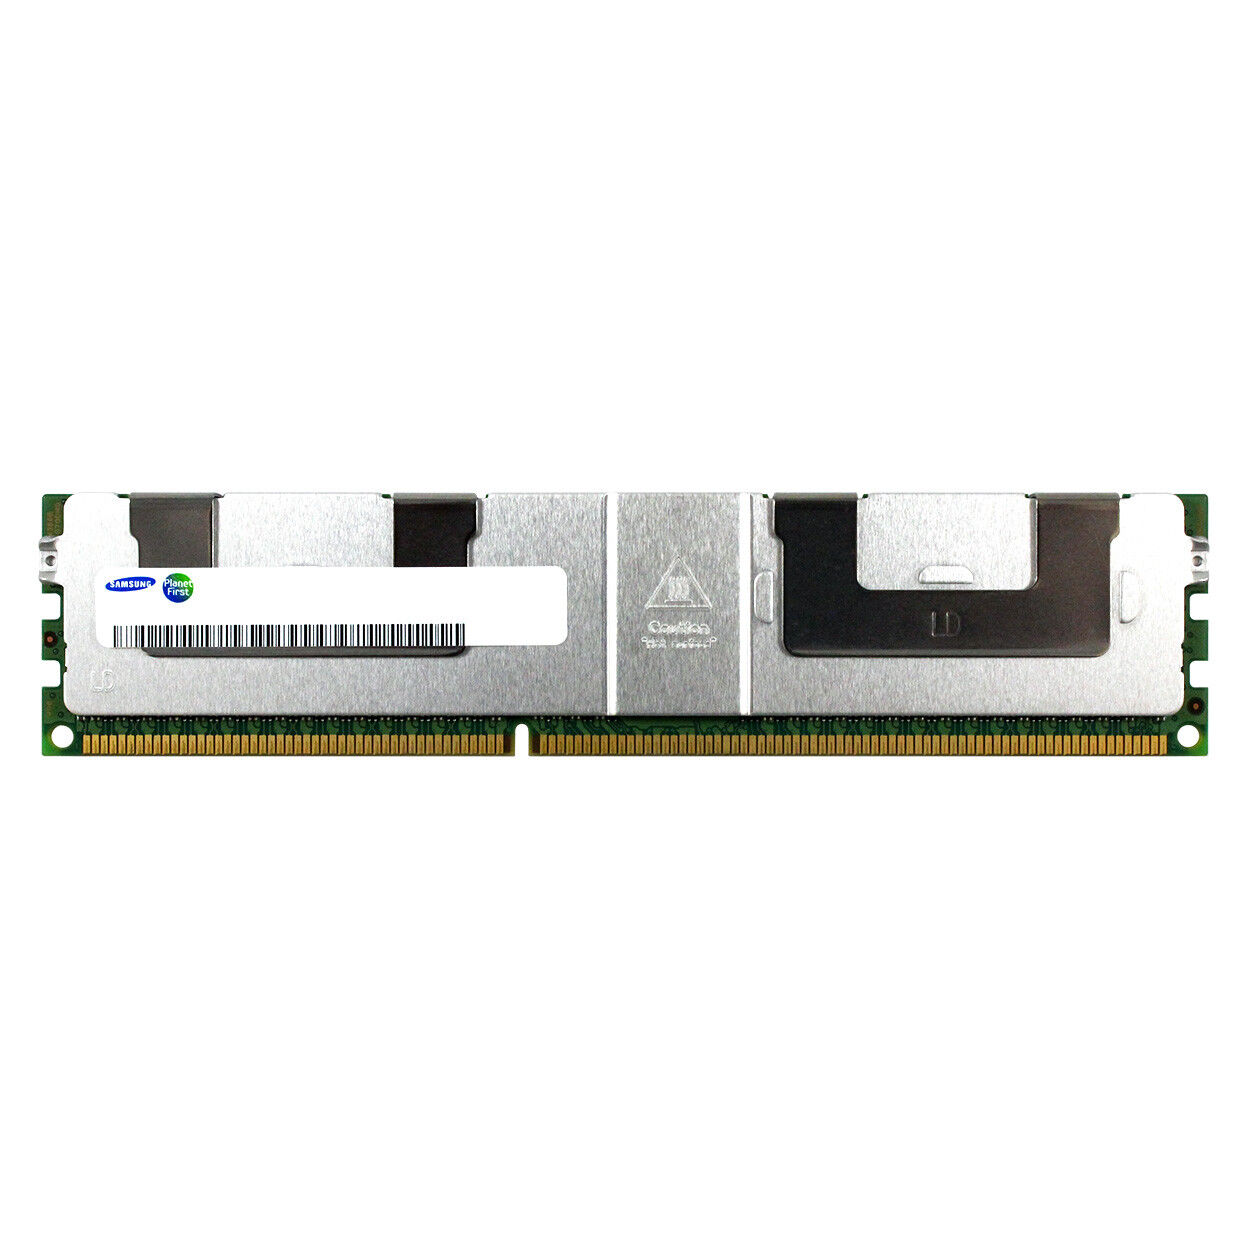 Samsung 32GB 4Rx4 PC3-14900L DDR3 1866 MHz 1.5V ECC LR LRDIMM Memory RAM 1x 32G